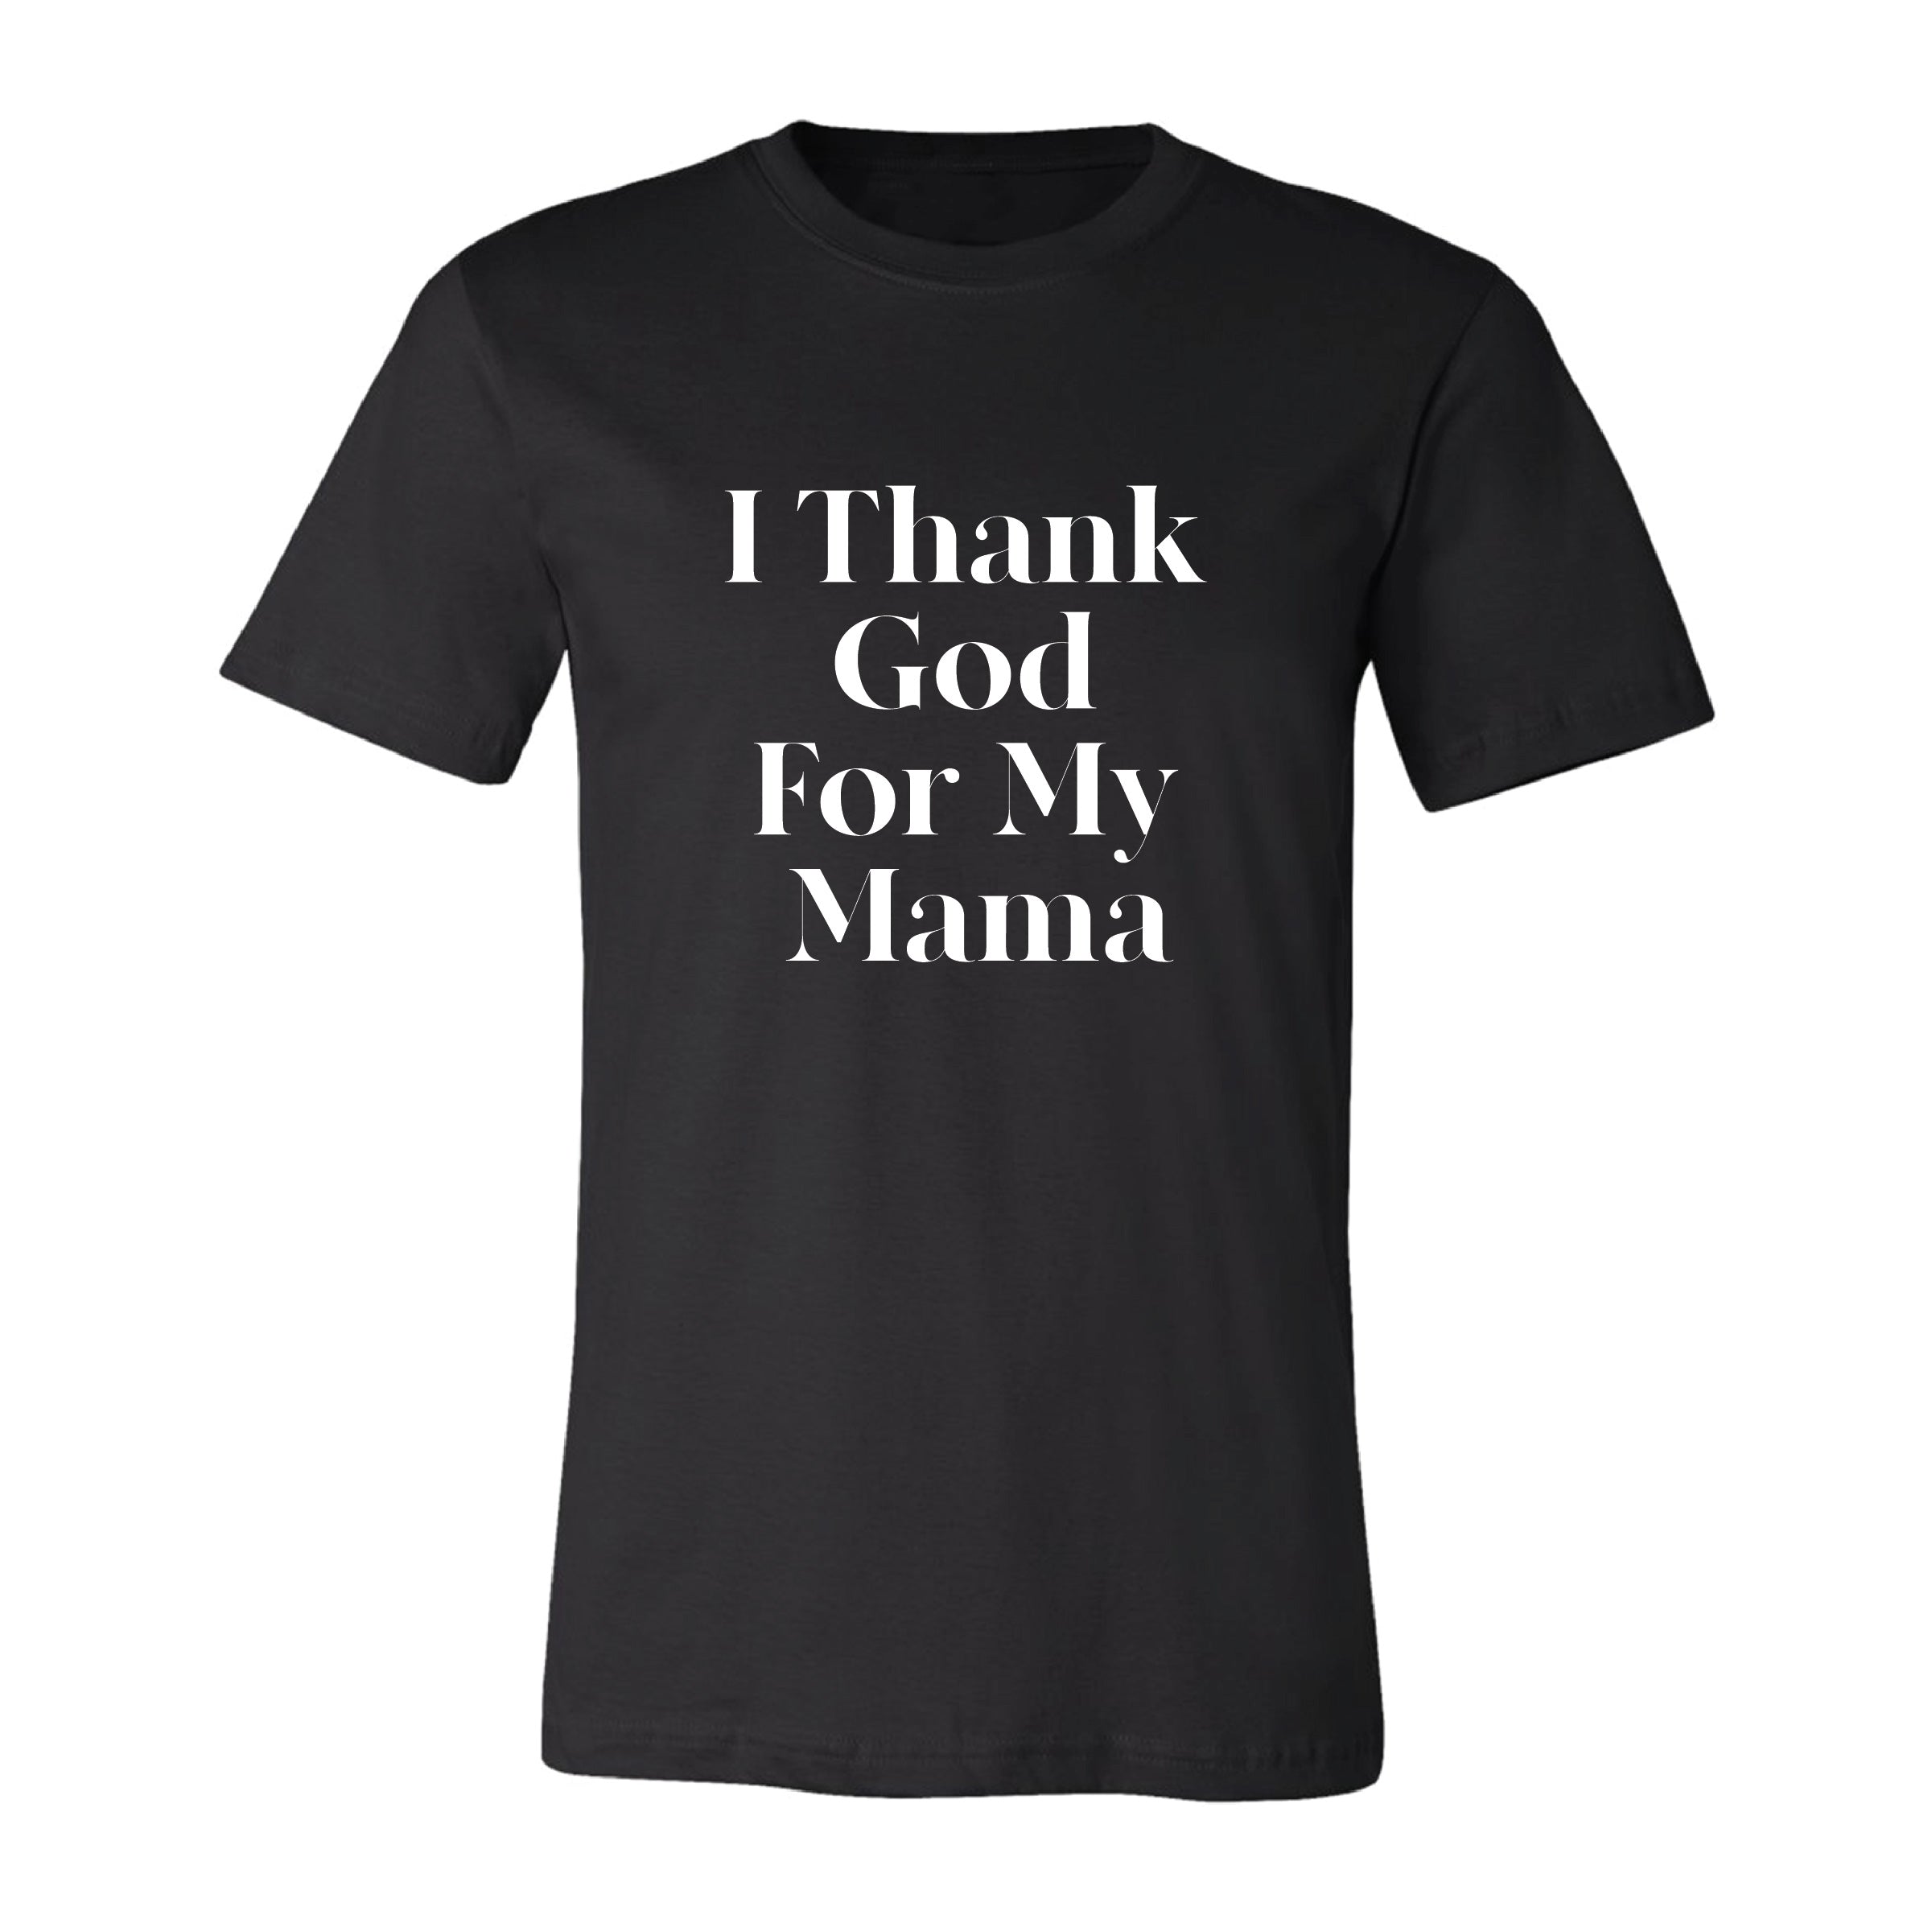 "I Thank GOD For My Mama" Short Sleeve T-Shirt